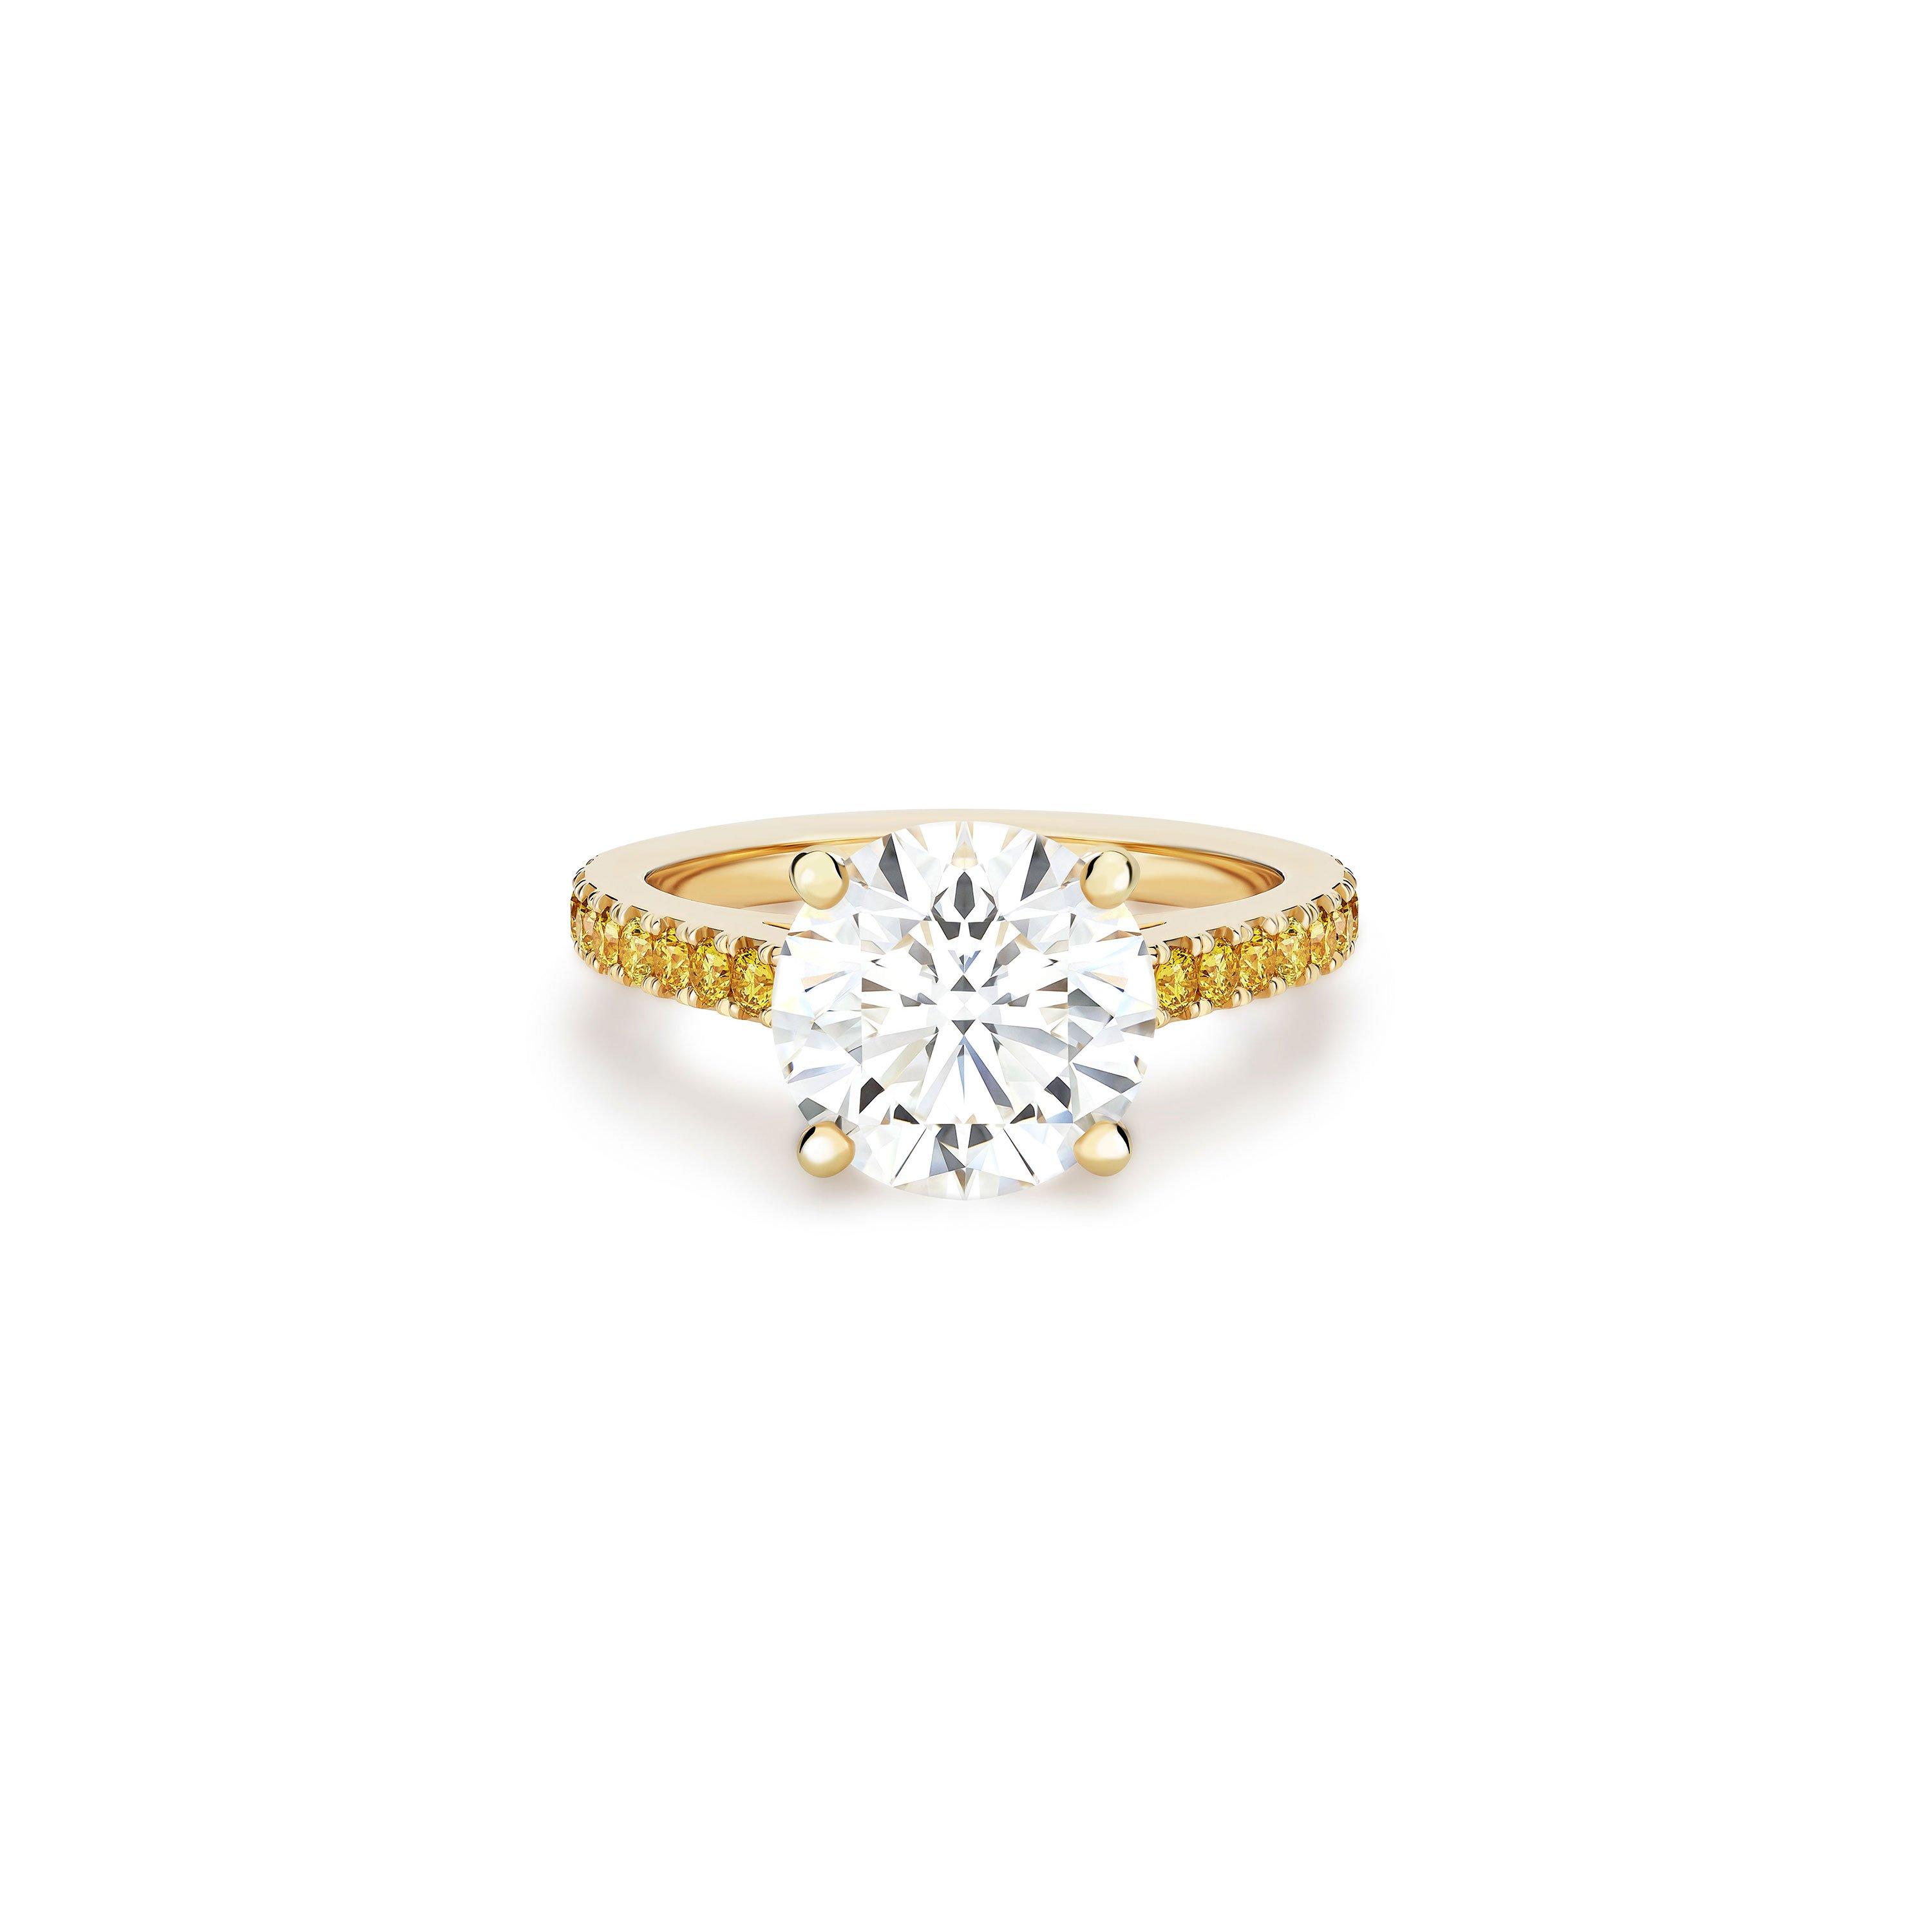 18K Diamond Necklace Sets -VVS Clarity E-F Color -Indian Diamond Jewelry  -Buy Online